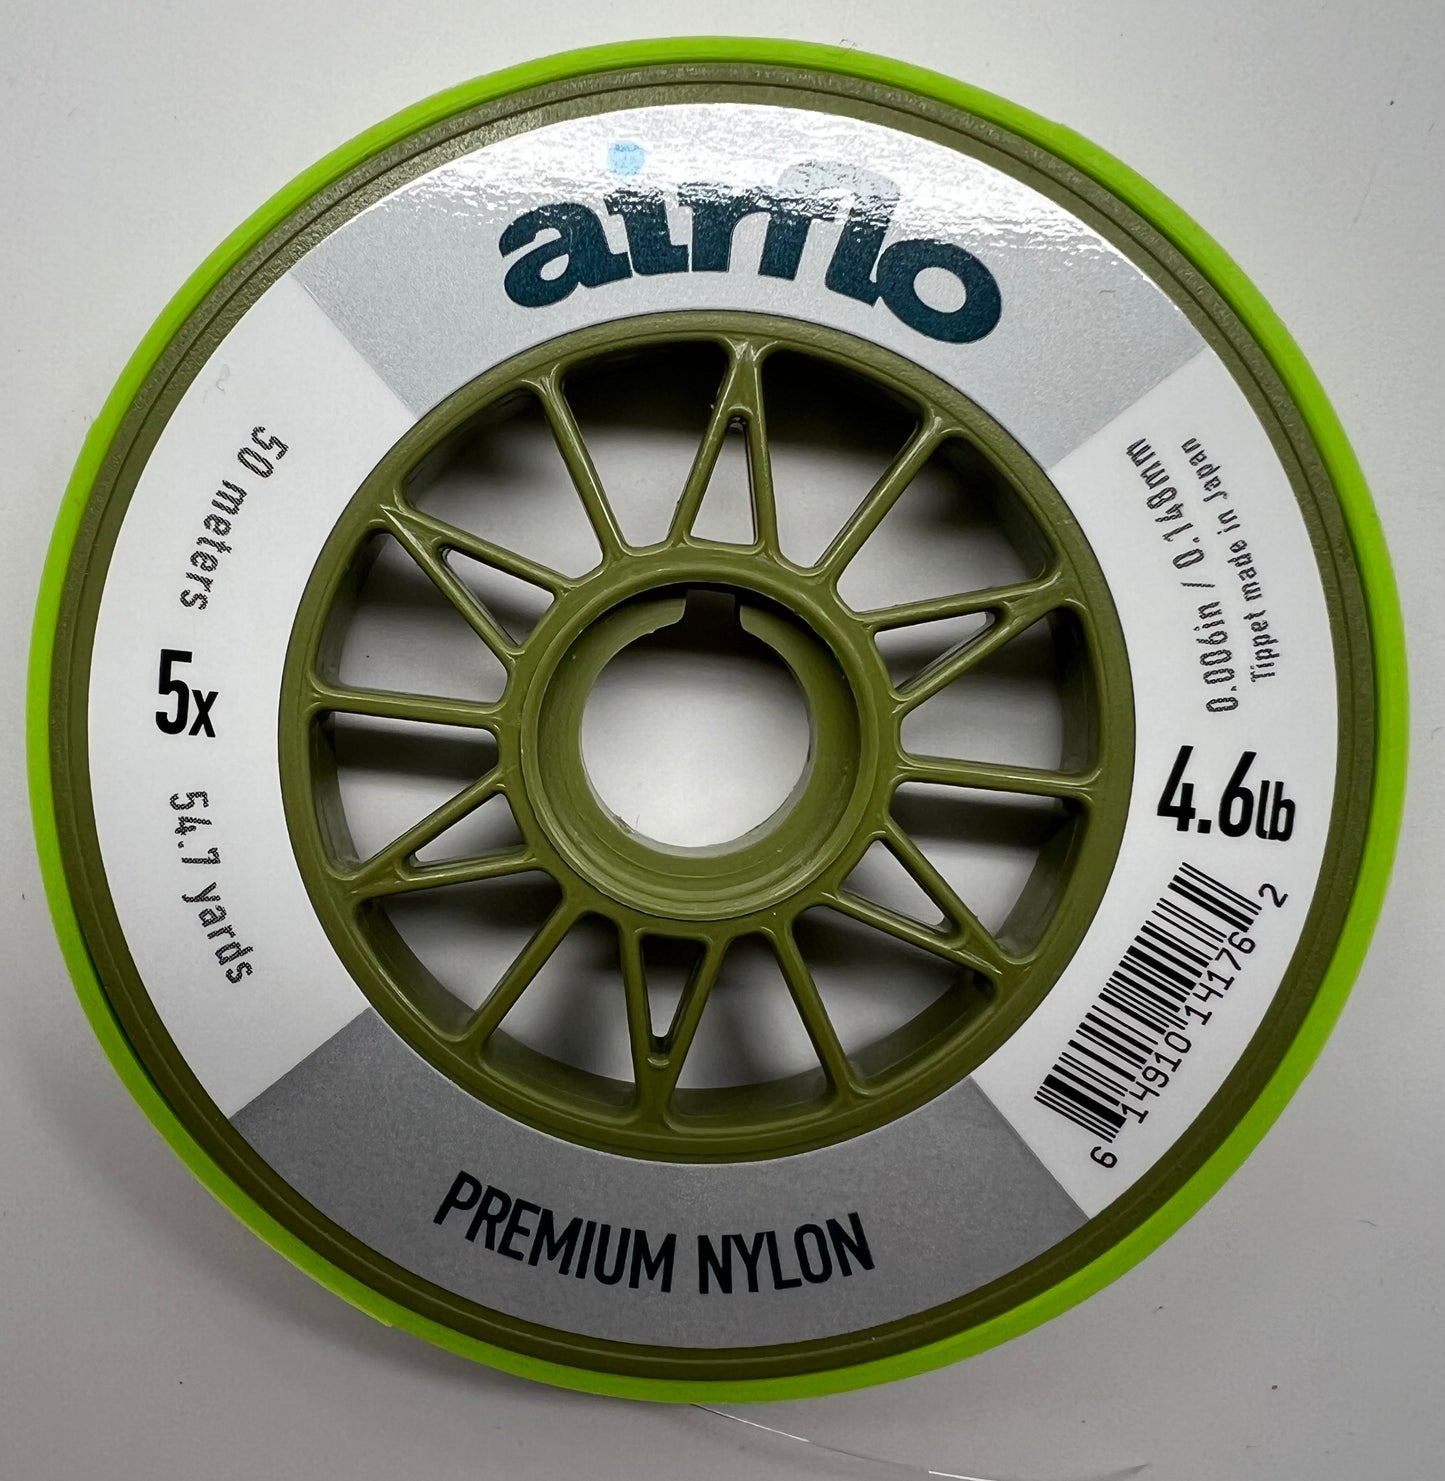 Airflo Premium Nylon Tippet - 50M